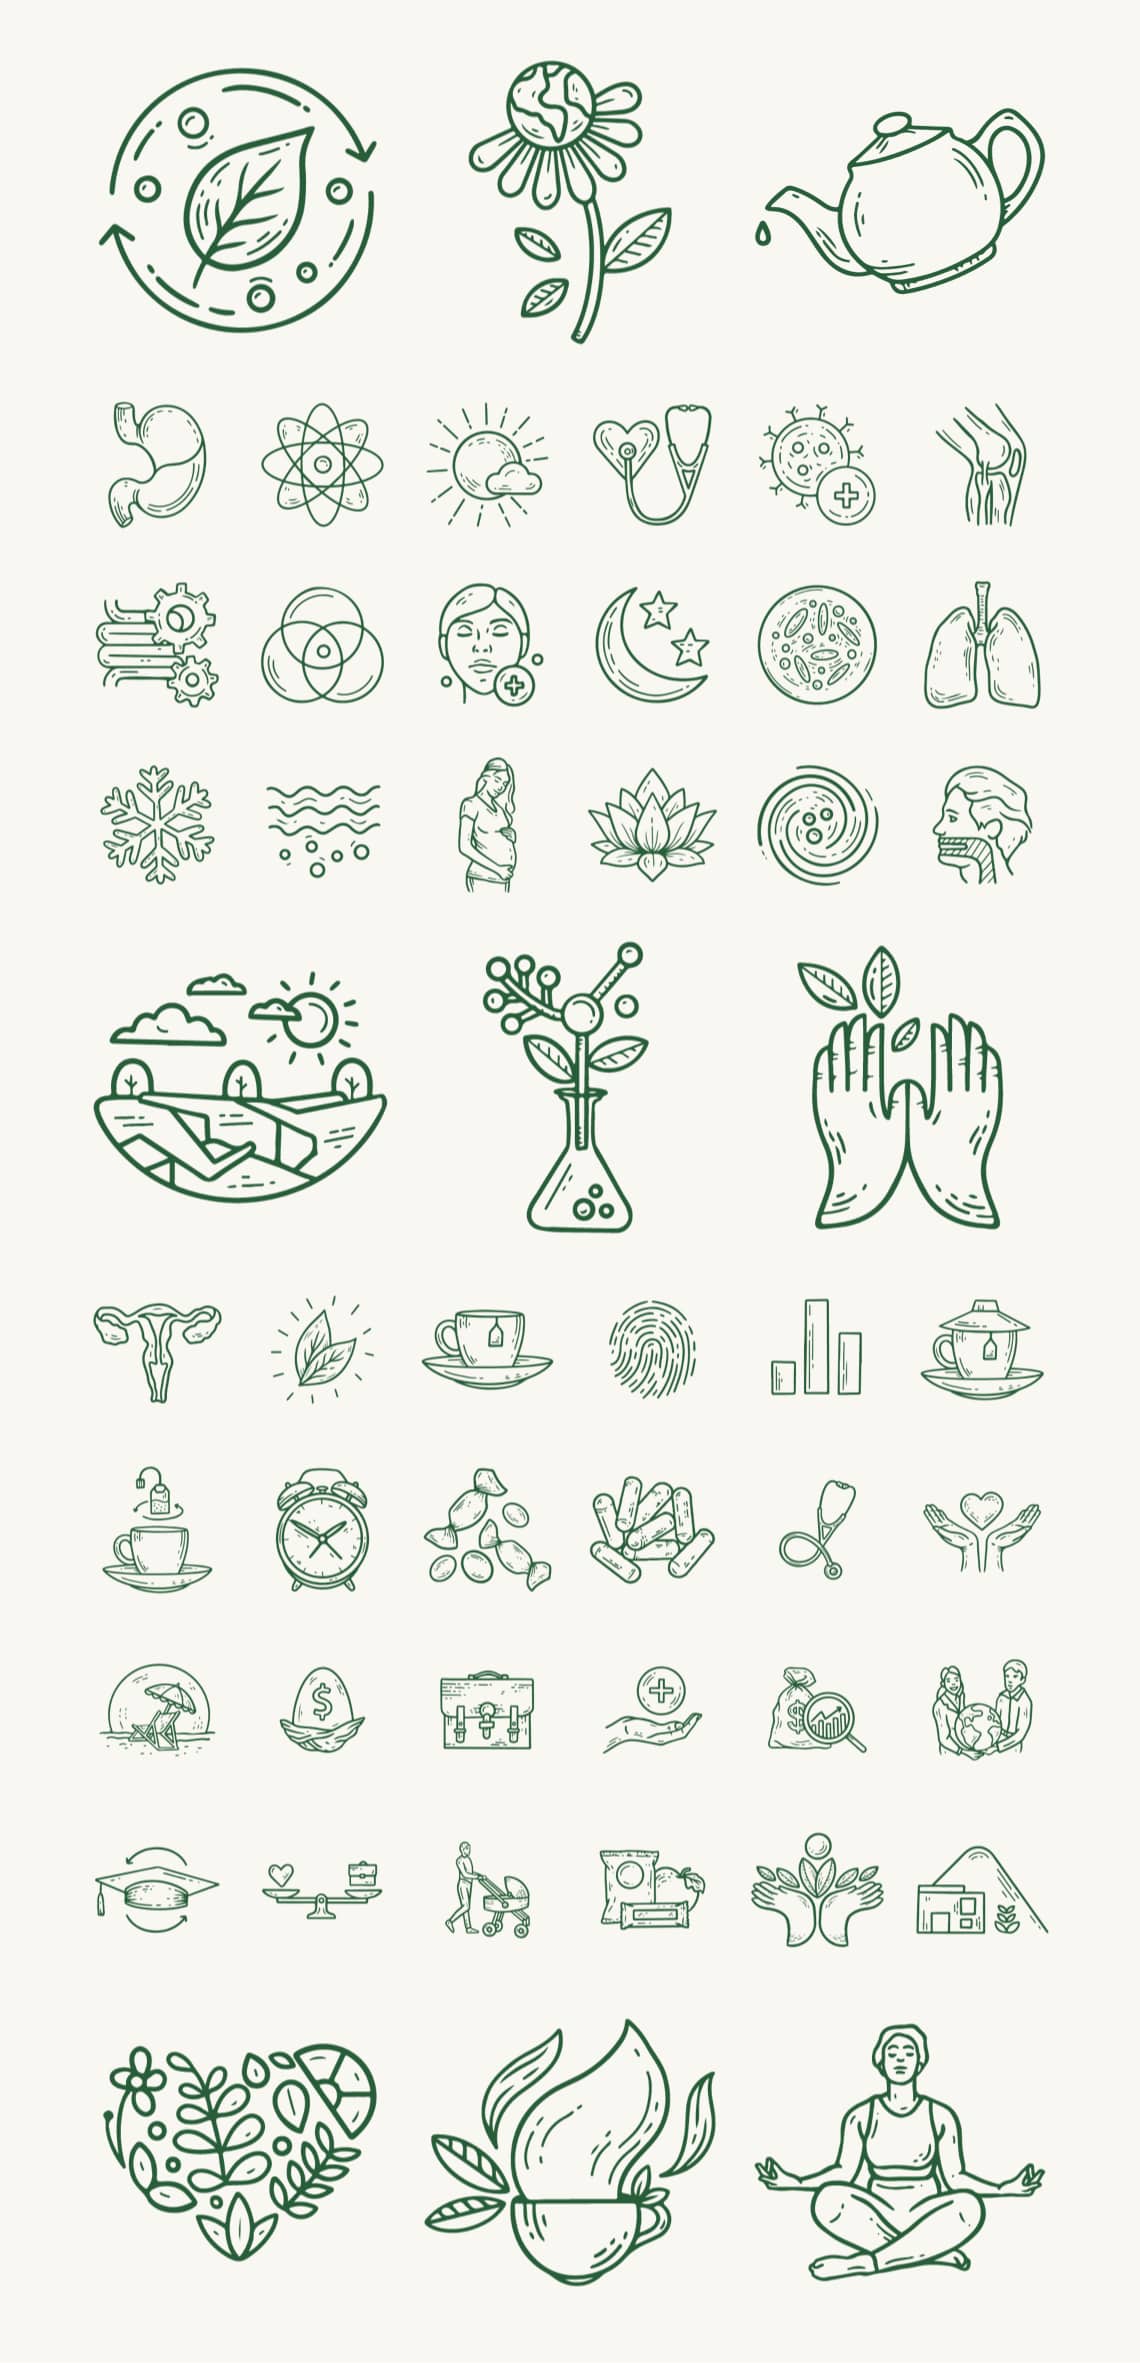 Traditional Medicinals - Icons